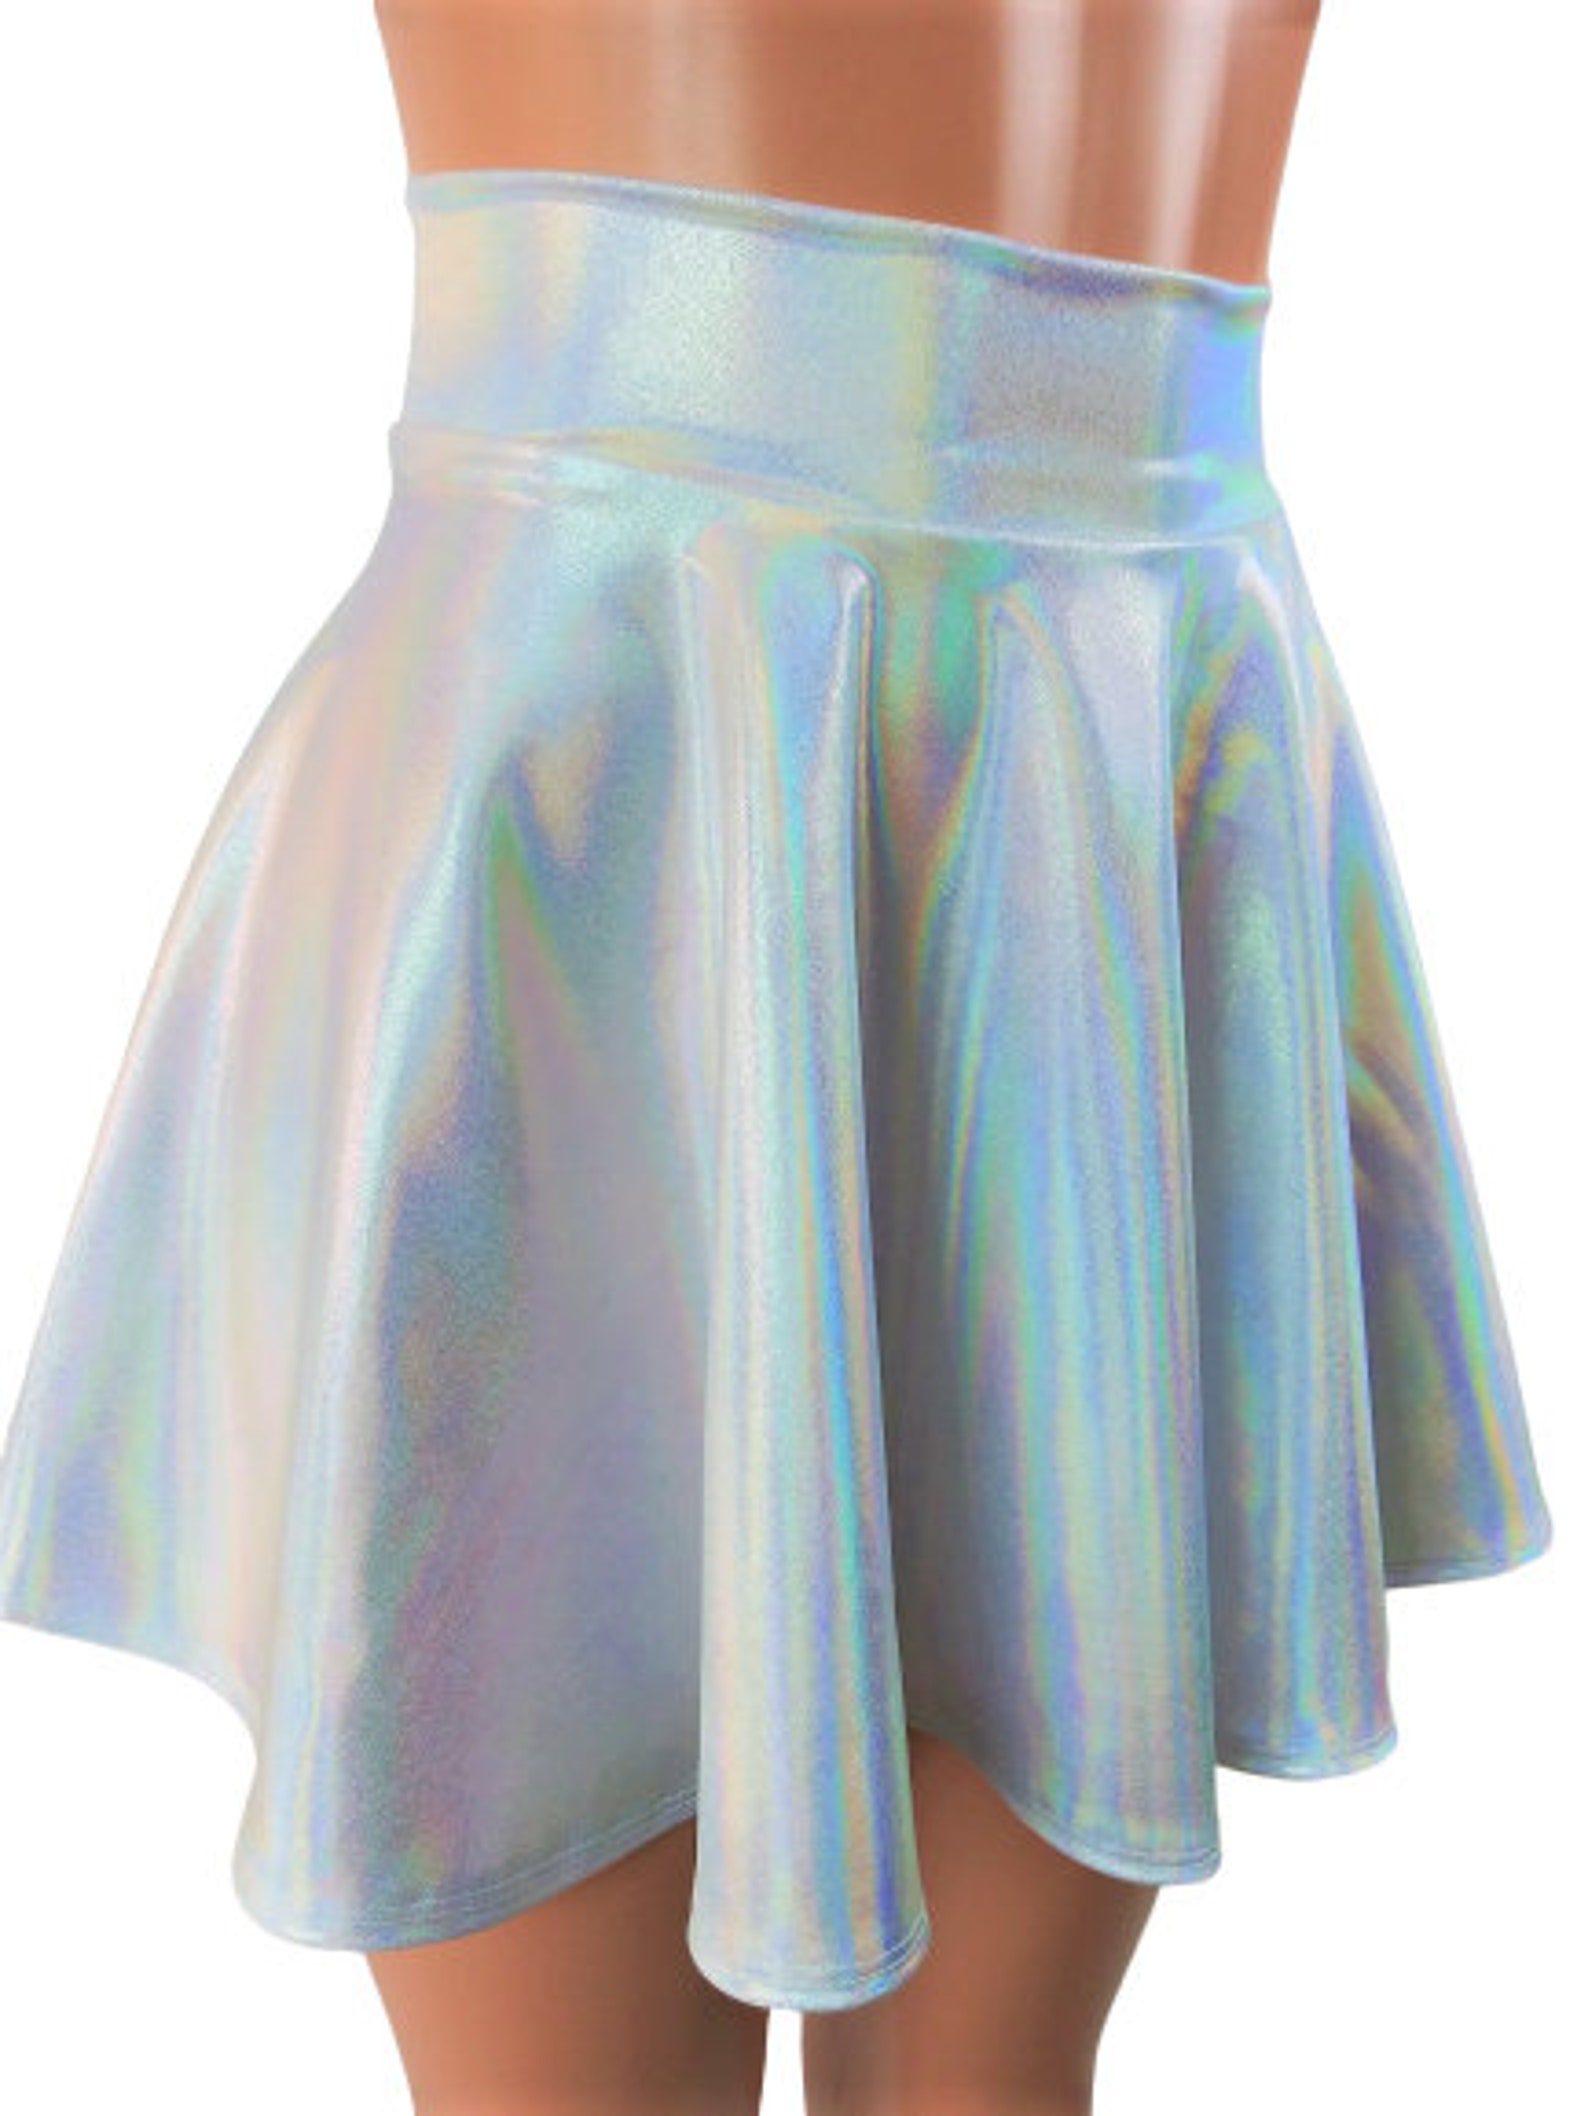 Flash bulb Skater skirt Circle skirt Soft flowing fabric | Etsy